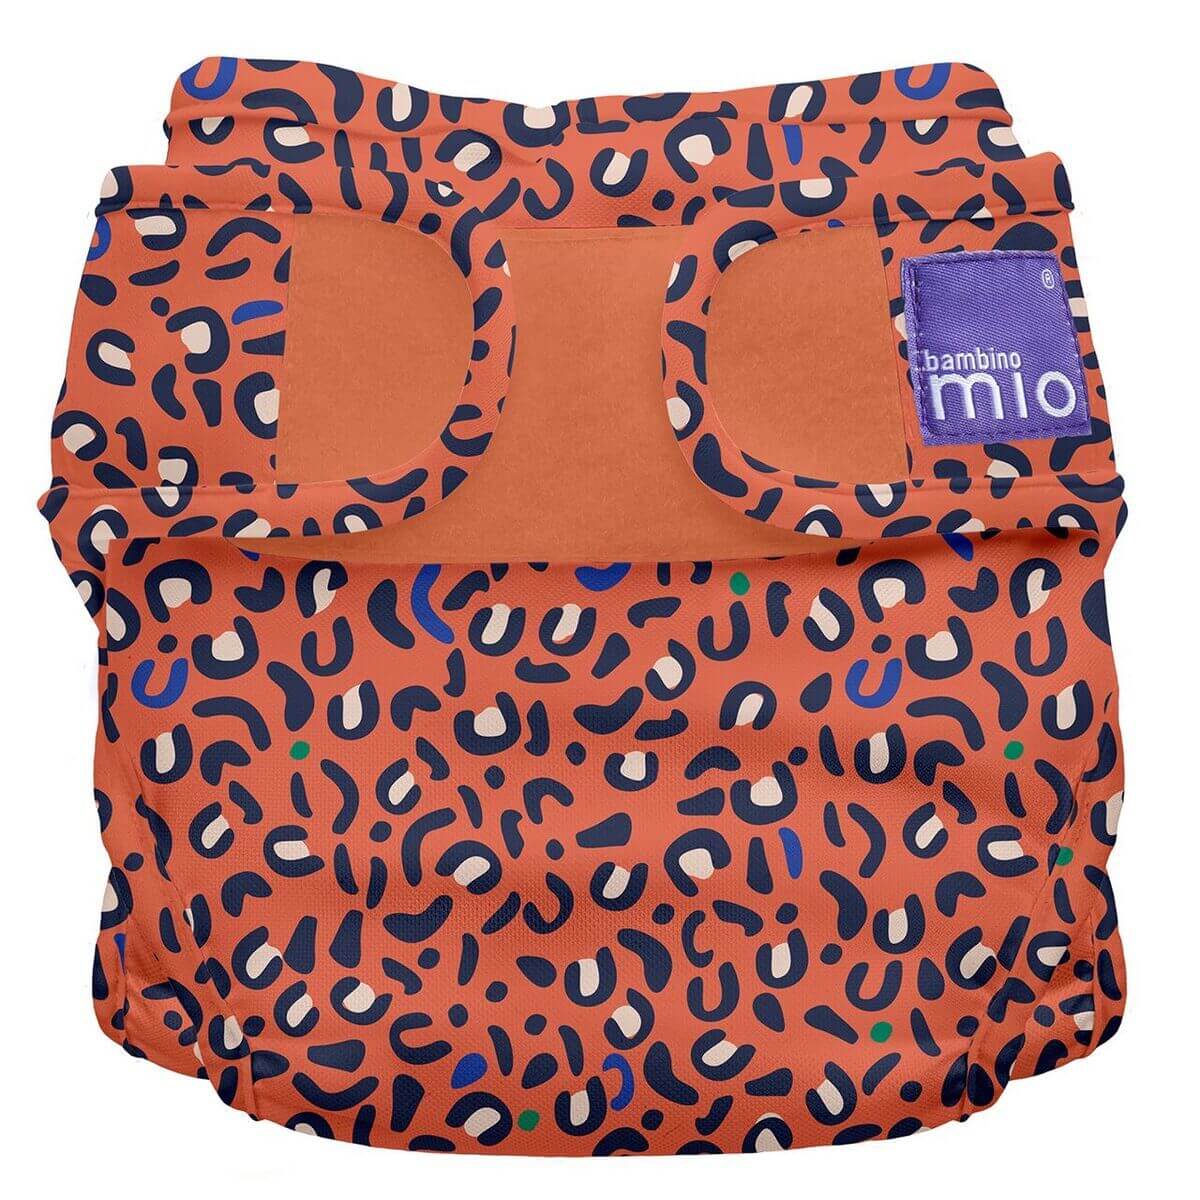 Bambino Mio Mioduo Reusable Nappy Cover Size: Size 1 Colour: Safari Spots reusable nappies nappy covers Earthlets